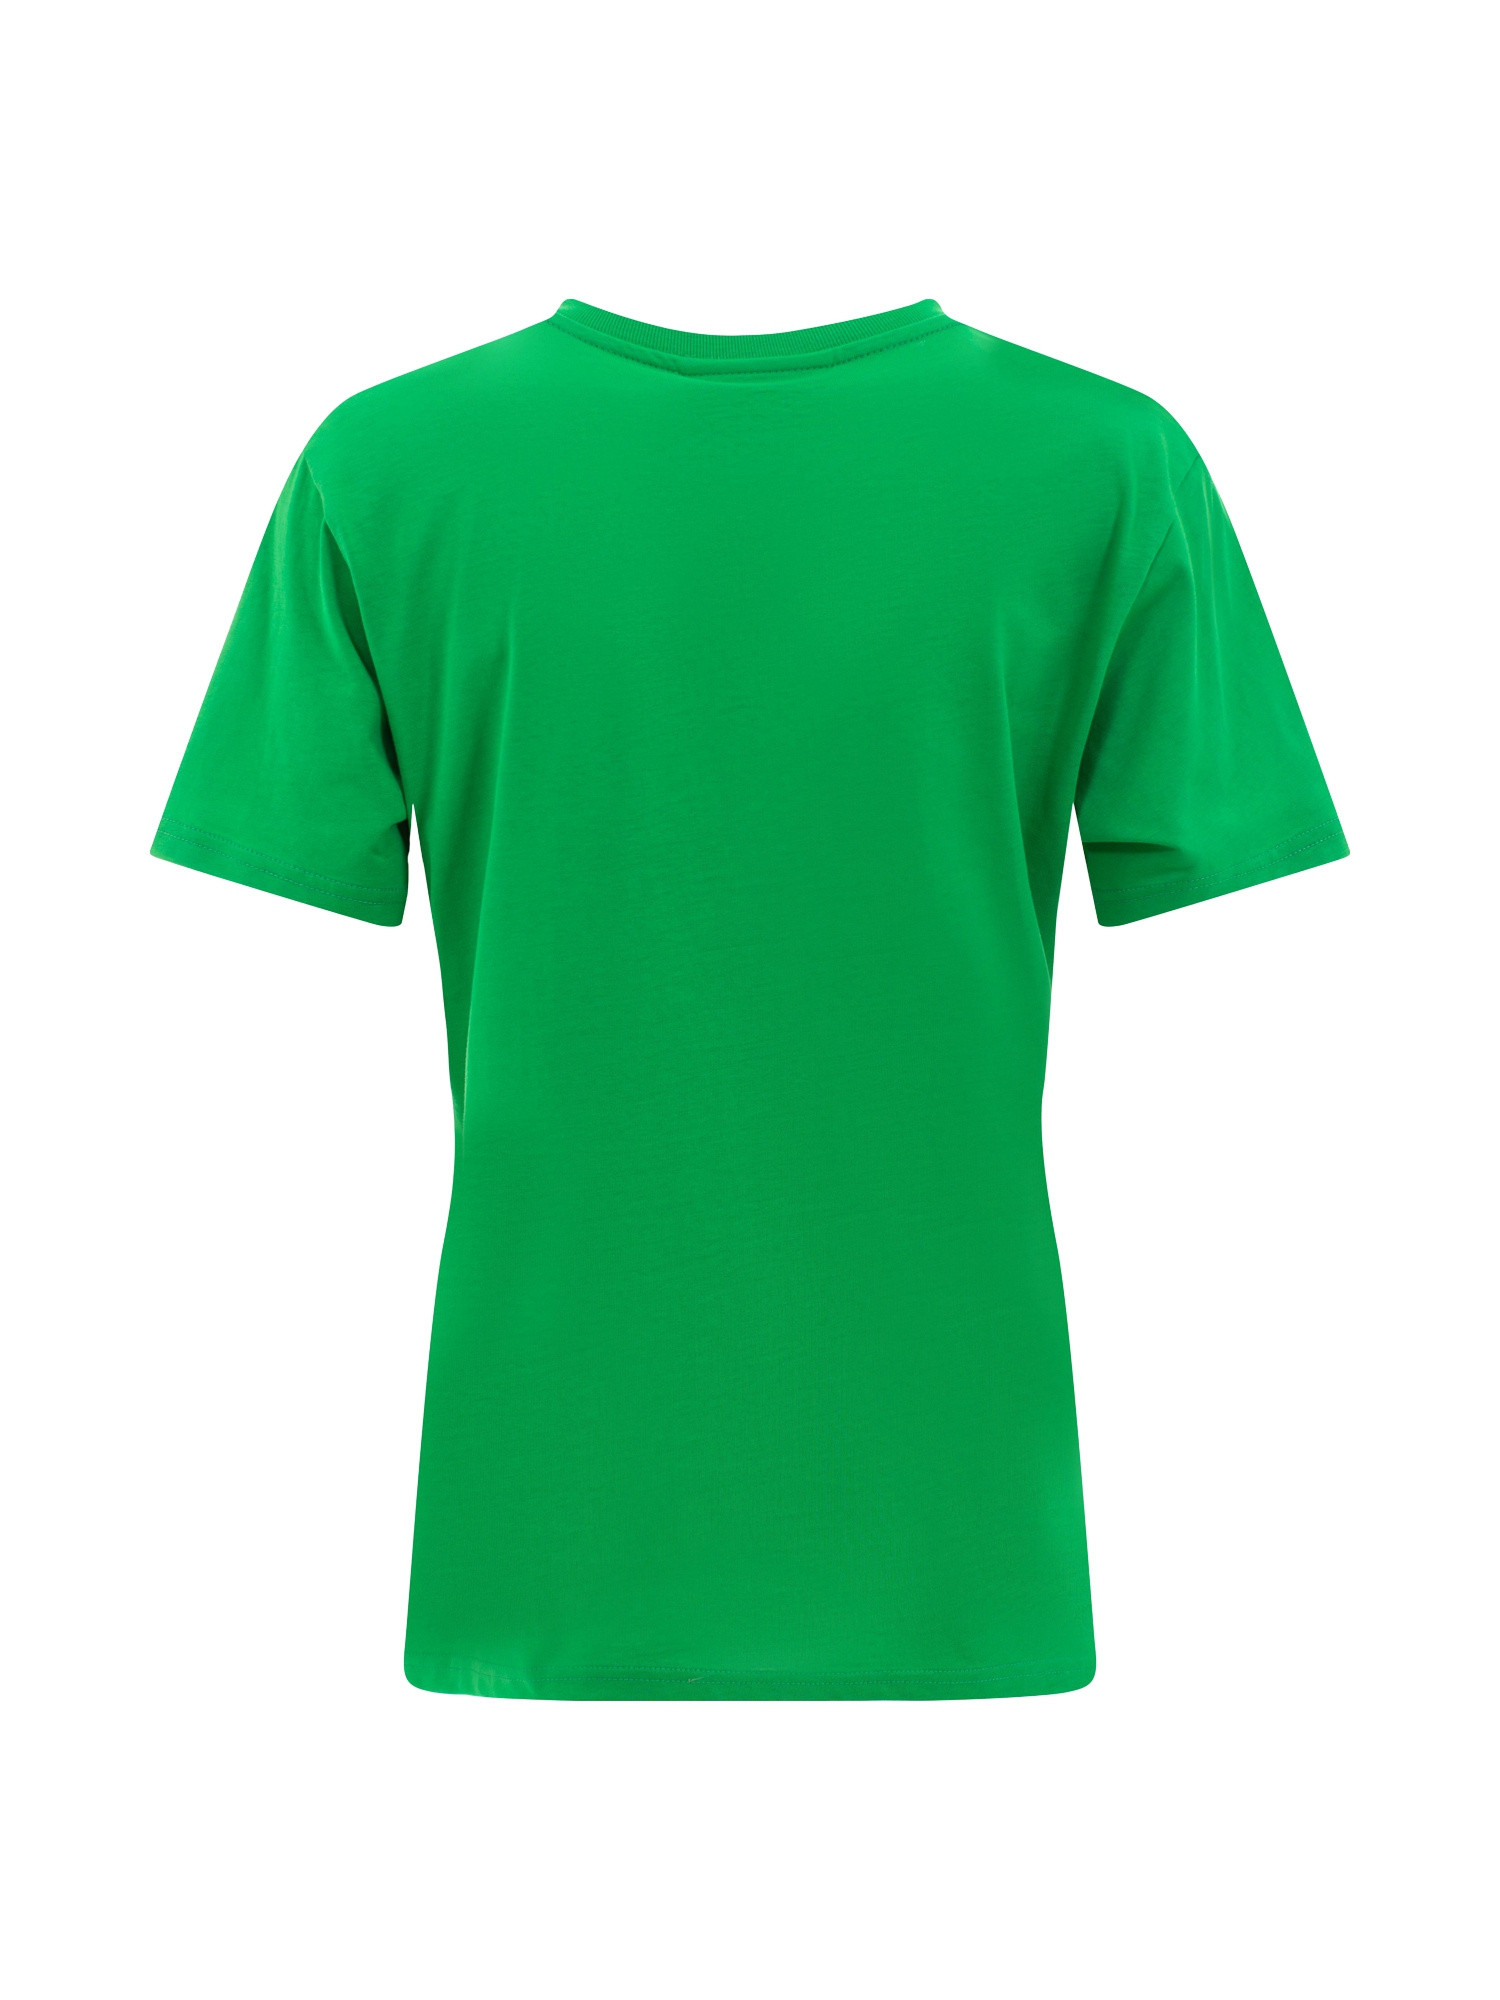 Chiara Ferragni - T-shirt con stampa logo, Verde, large image number 1